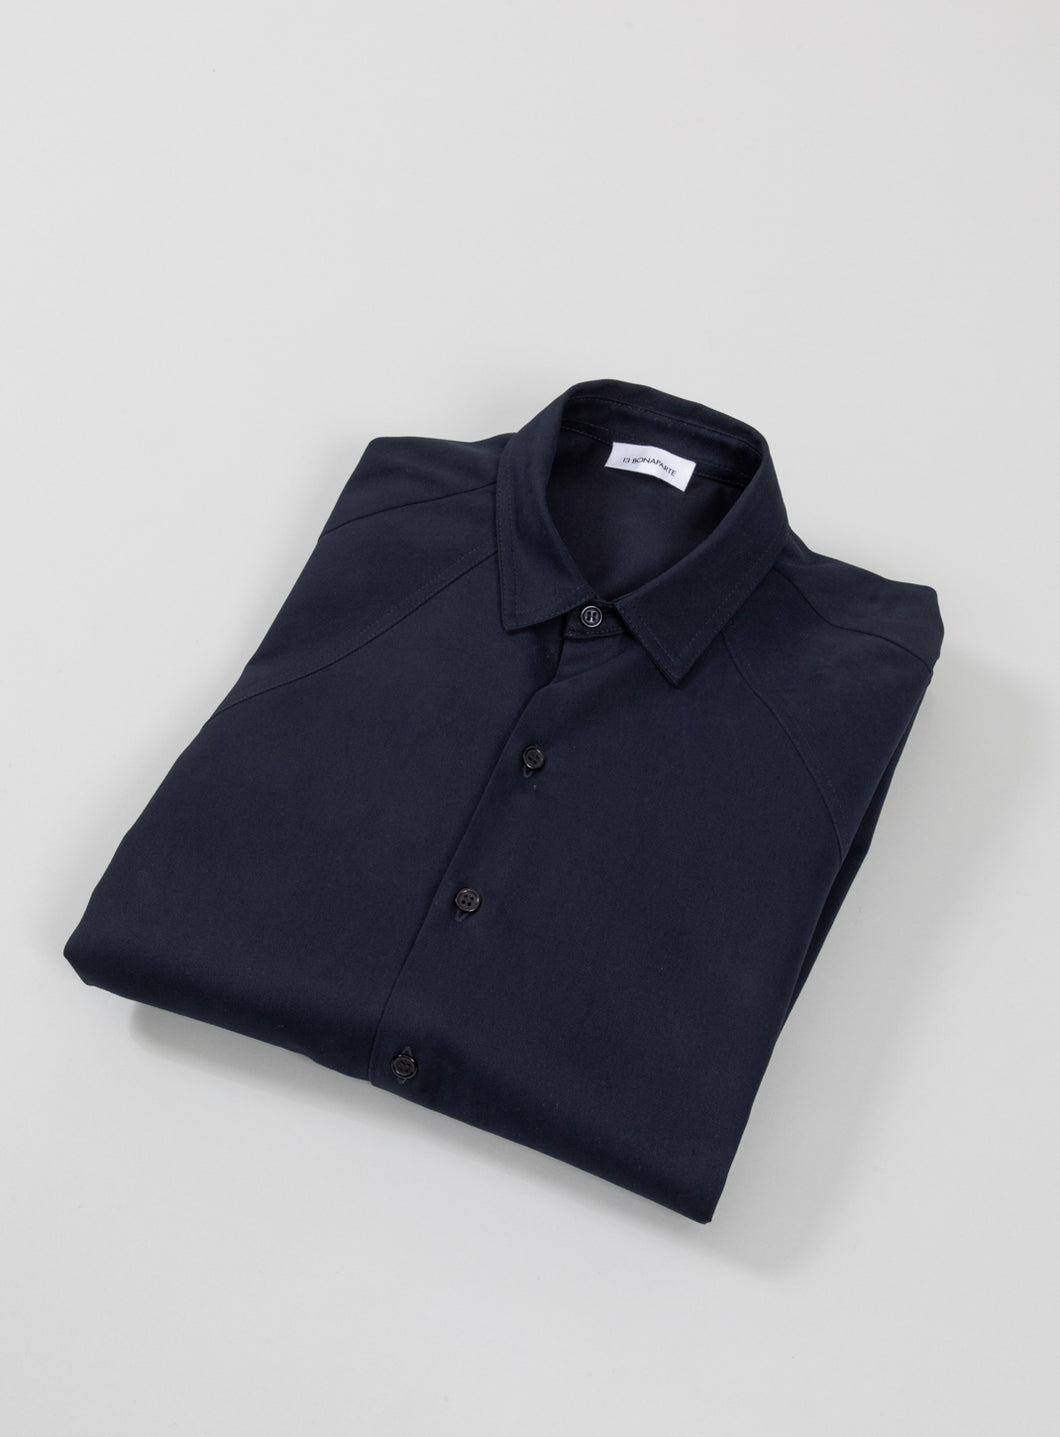 Raglan Sleeve Overshirt in Navy Blue Cotton Gabardine